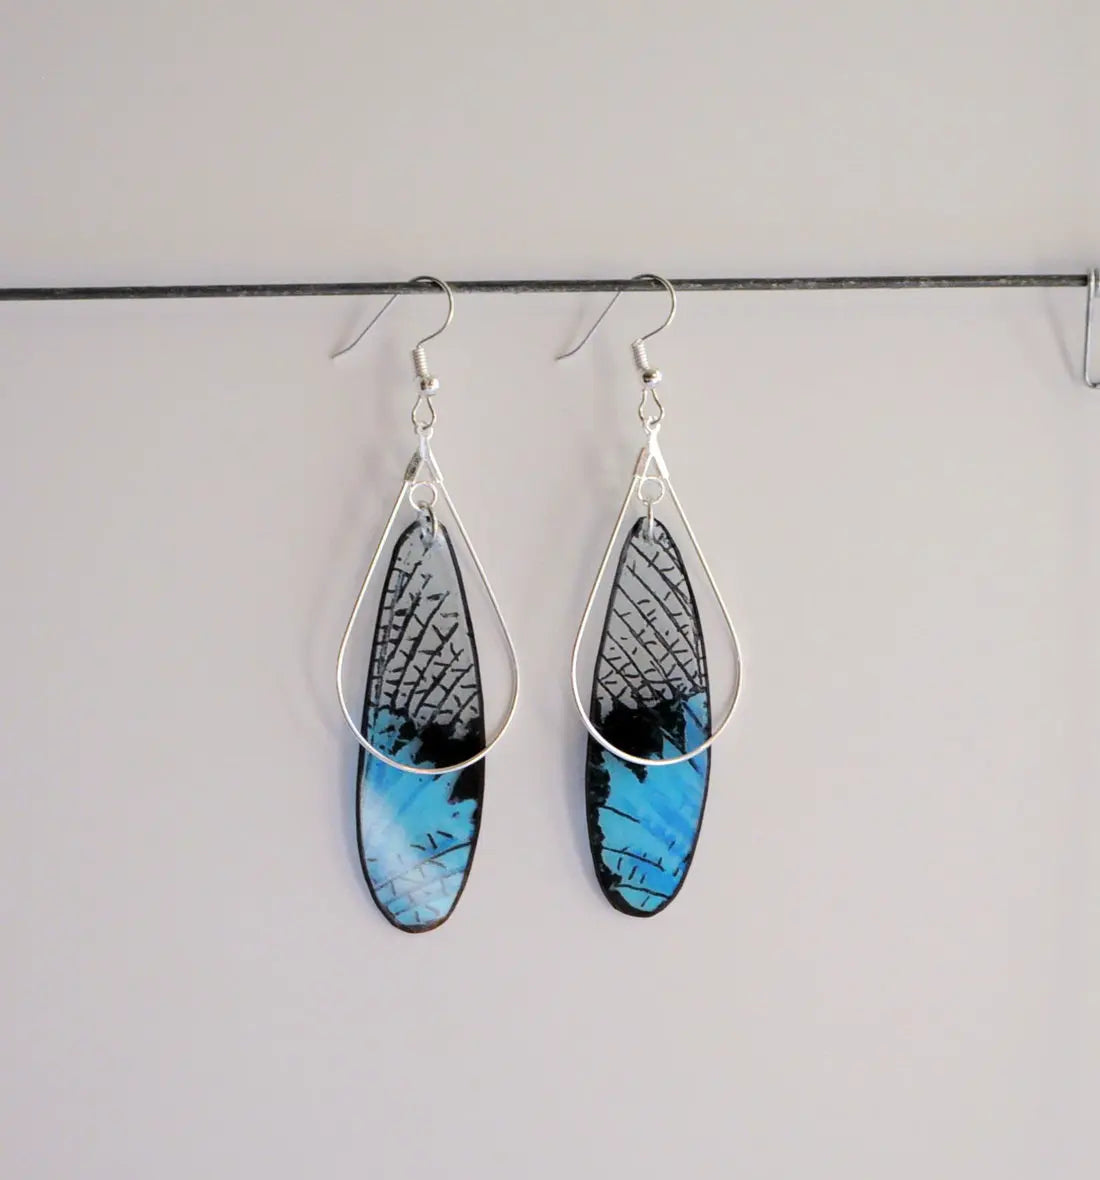 Butterfly earrings DougWalpusArtStudio